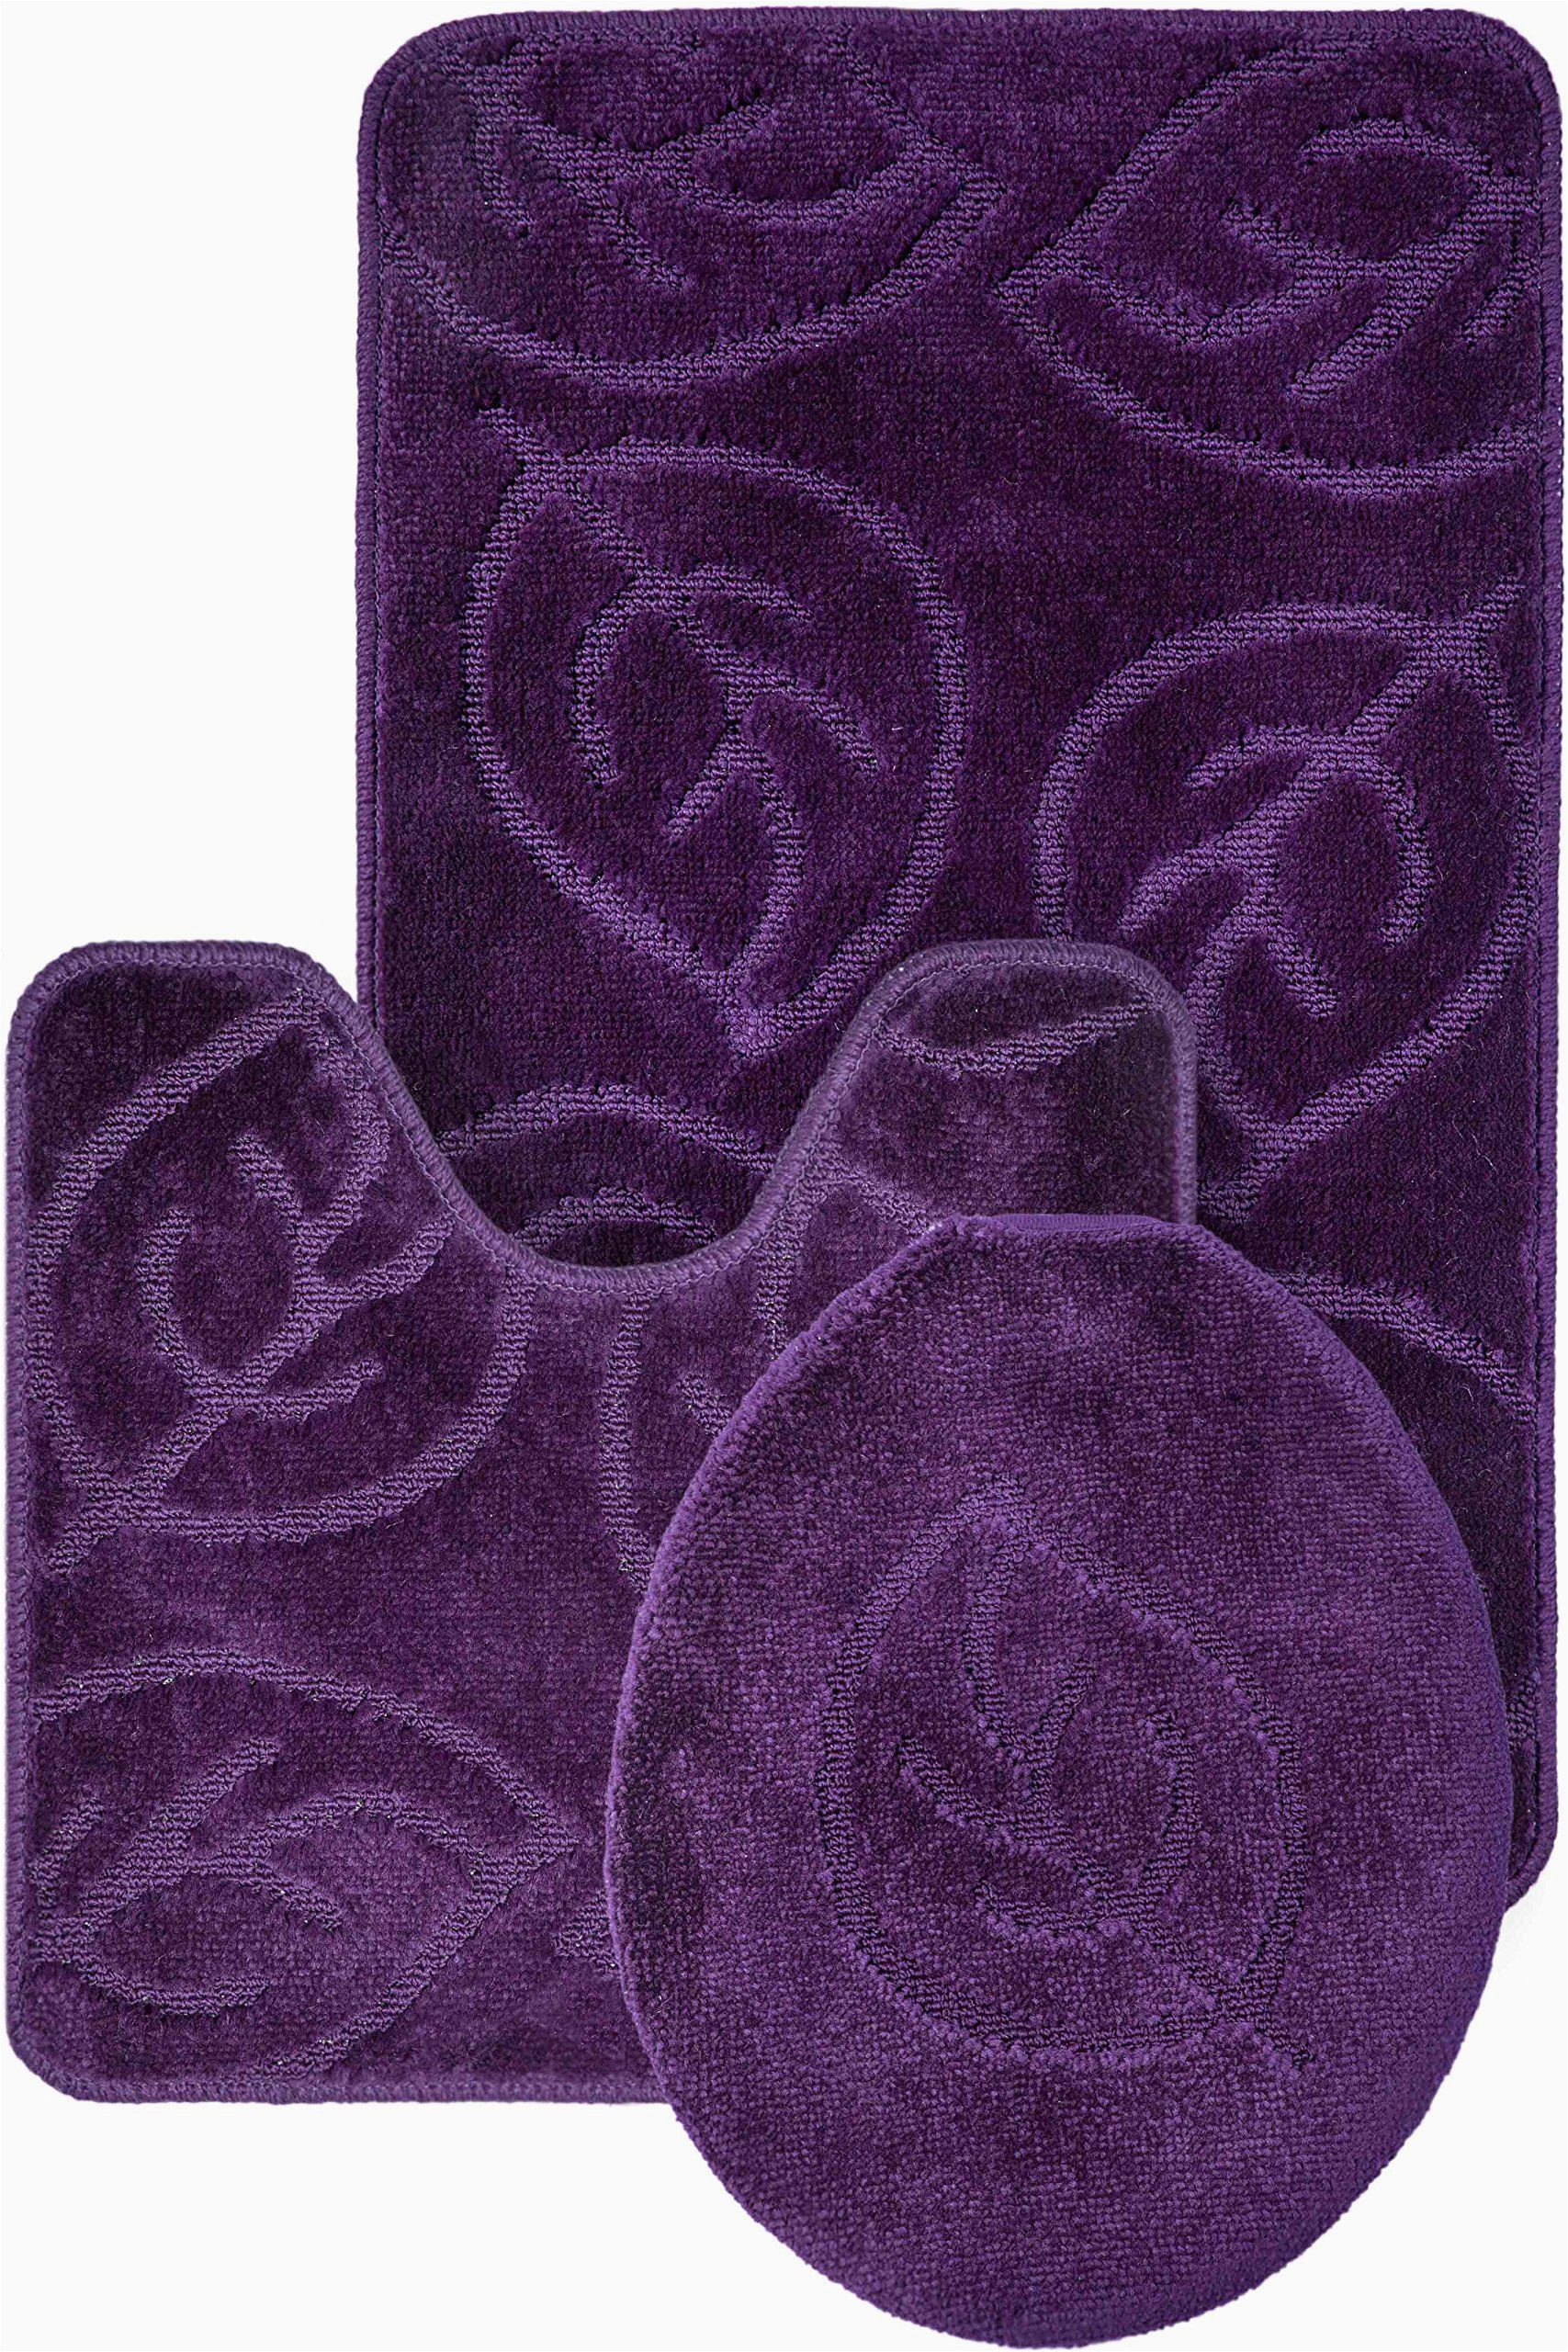 Lavender Bathroom Rug Sets Everdayspecial Purple Bath Set Leaf Pattern Bathroom Rug